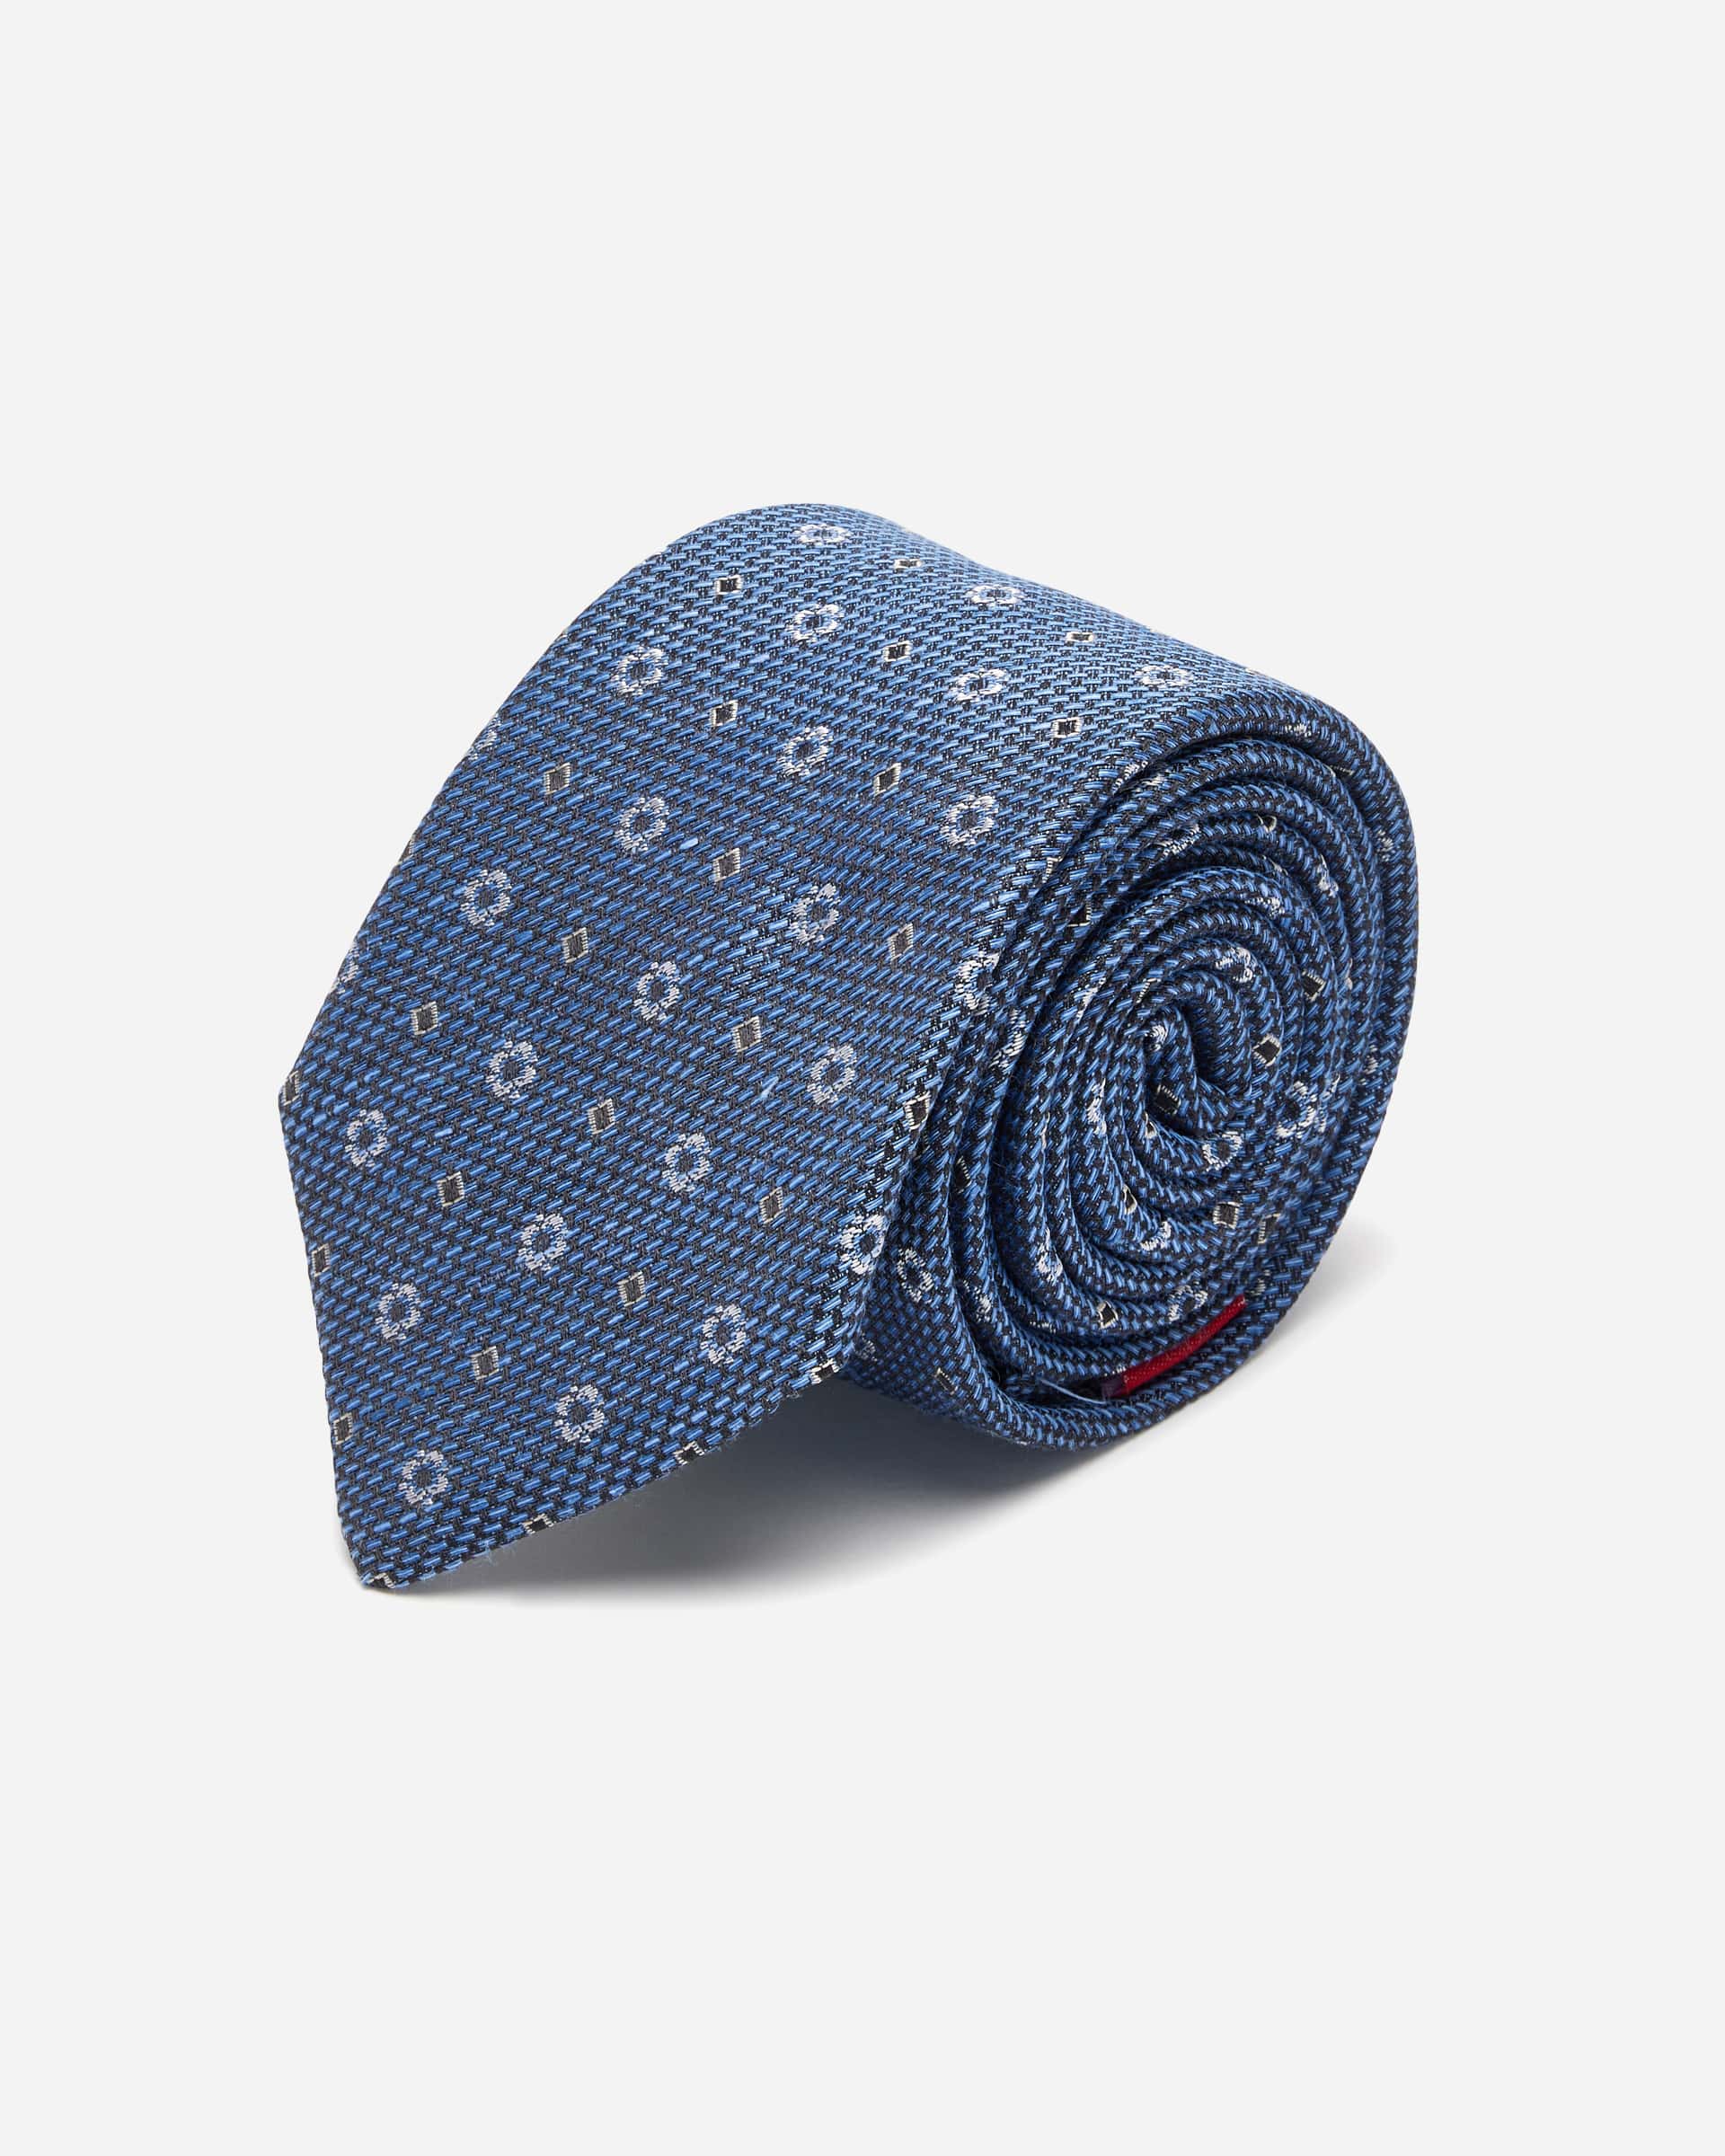 Blue Motif Silk Tie - Men's Ties at Menzclub